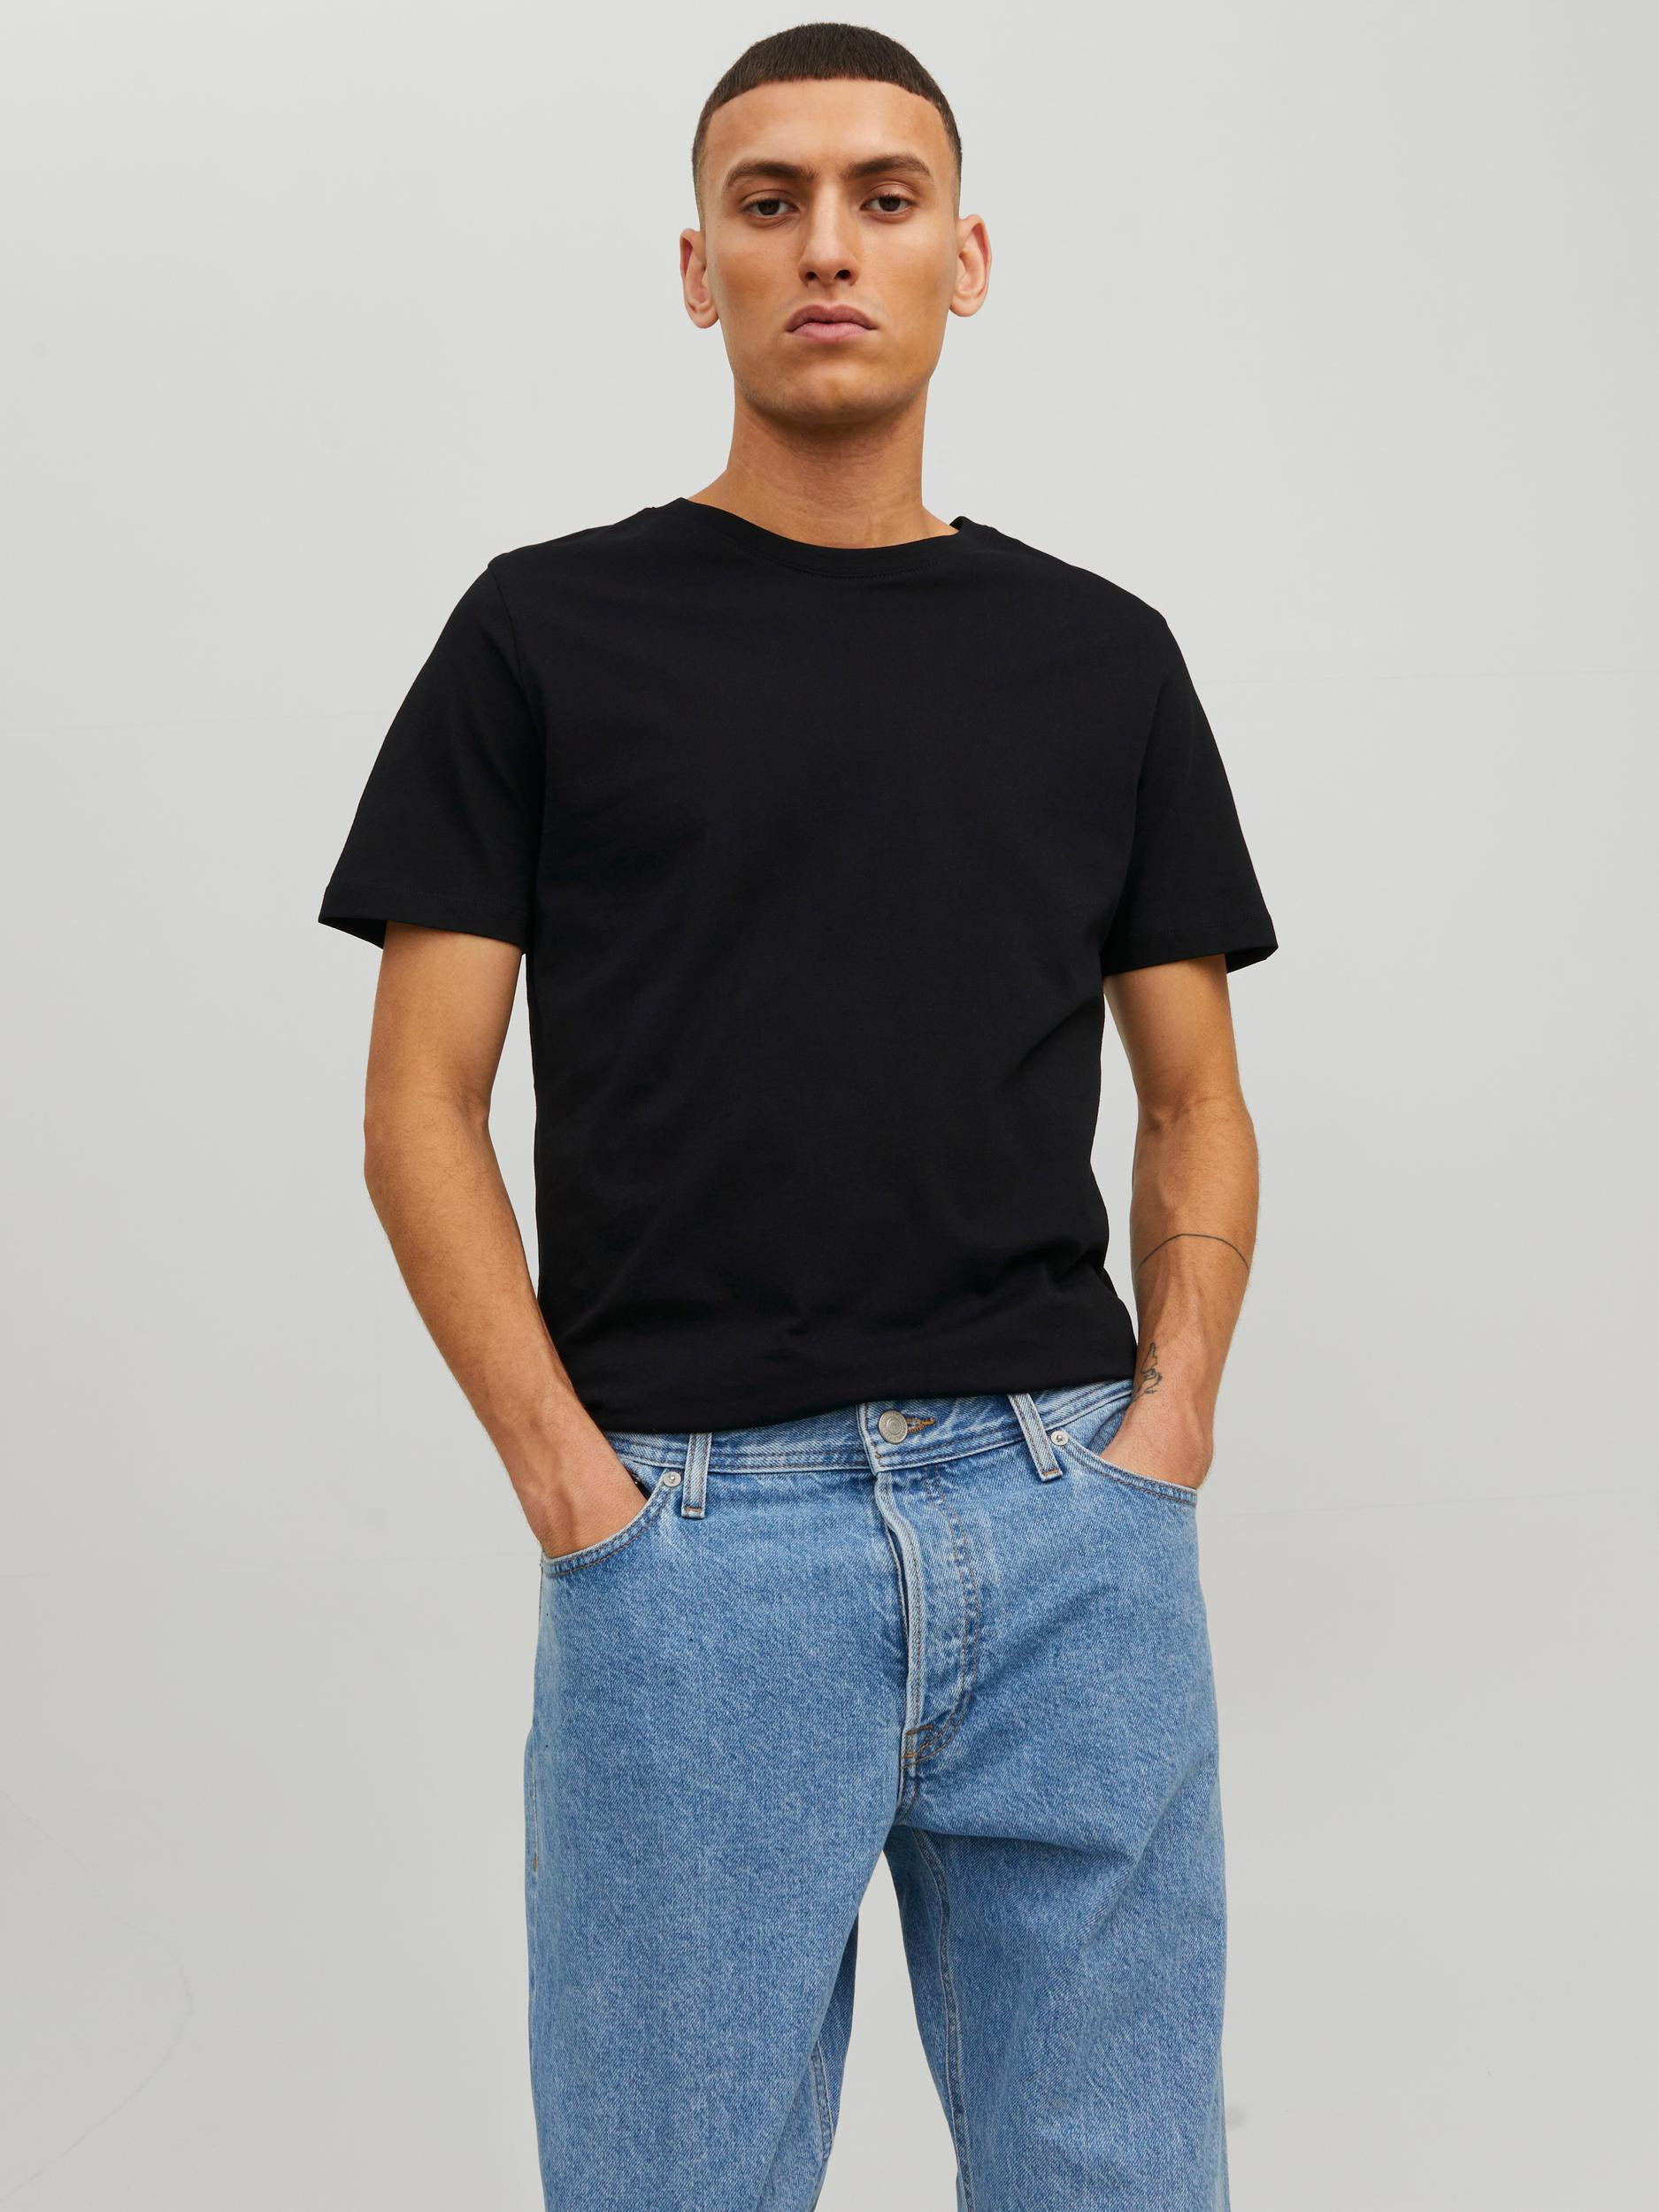 Jack & Jones - Cotton T-shirt, Black, large image number 2